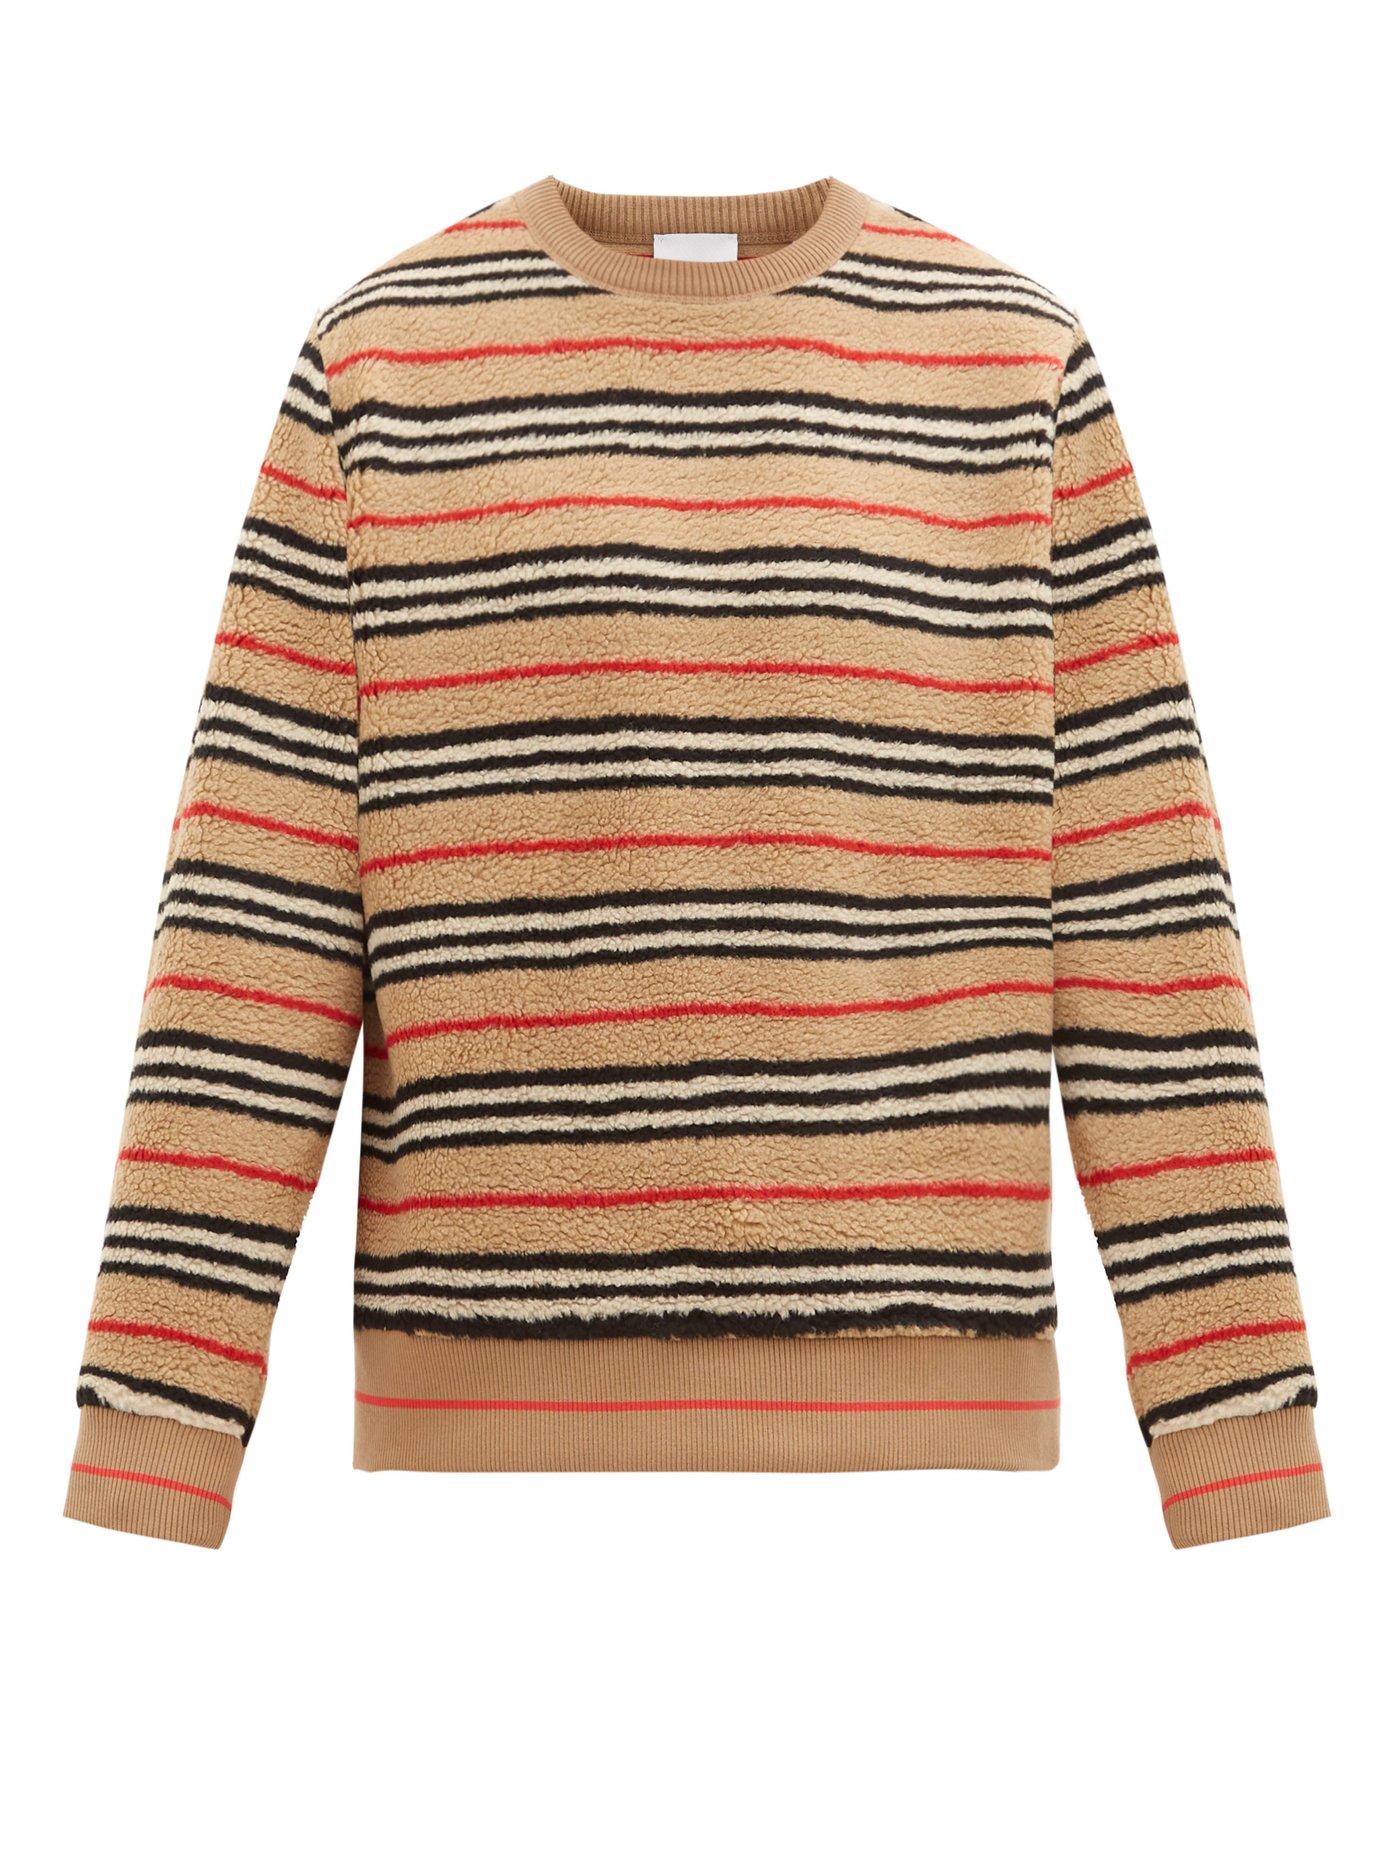 burberry striped sweater